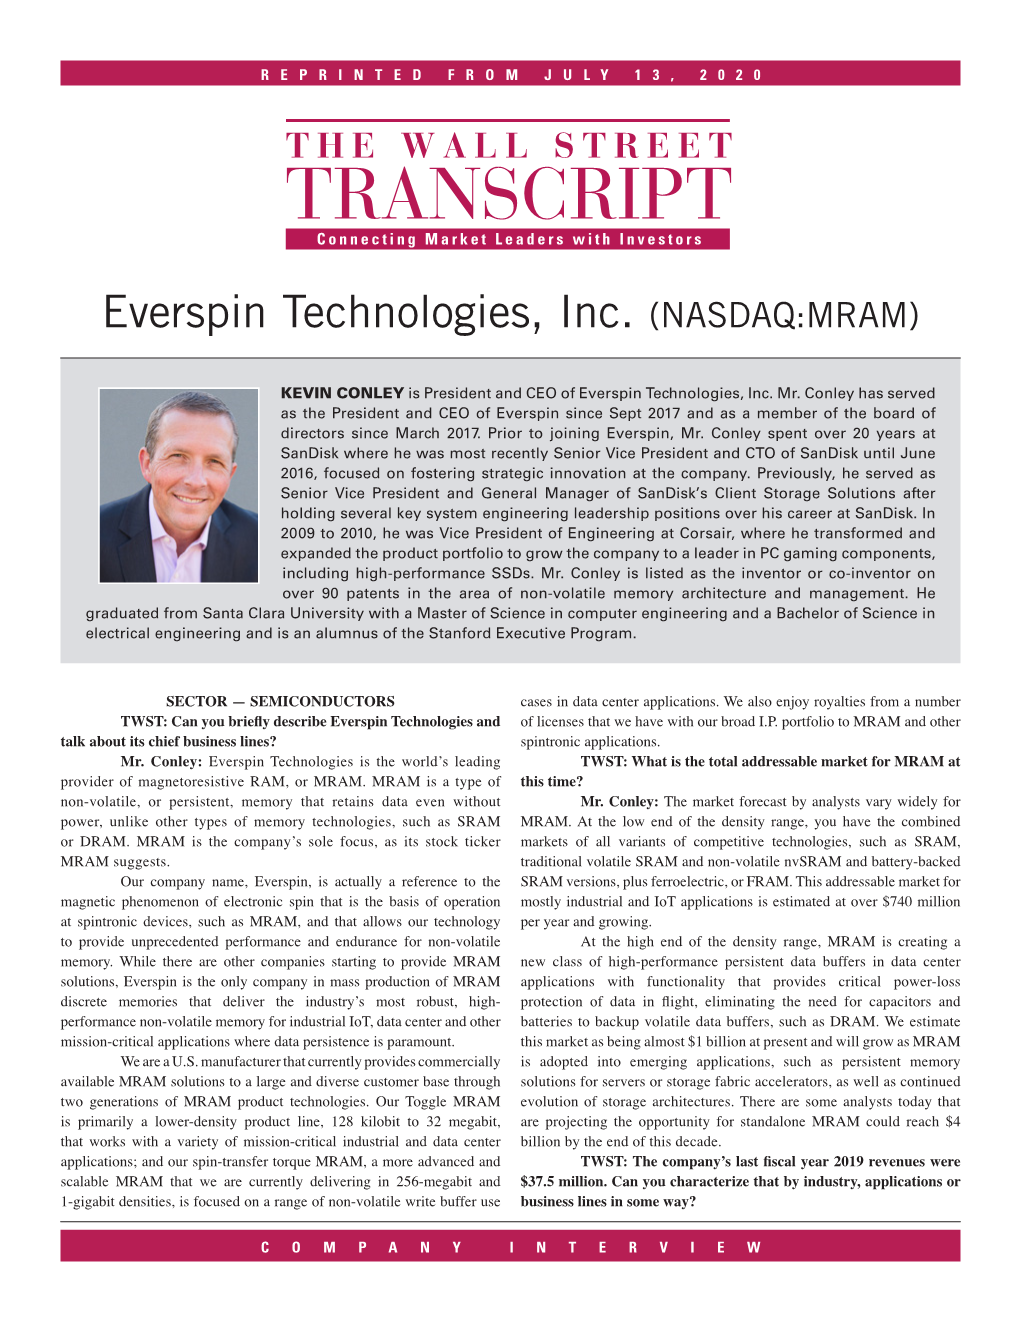 Everspin Technologies, Inc. (NASDAQ:MRAM)